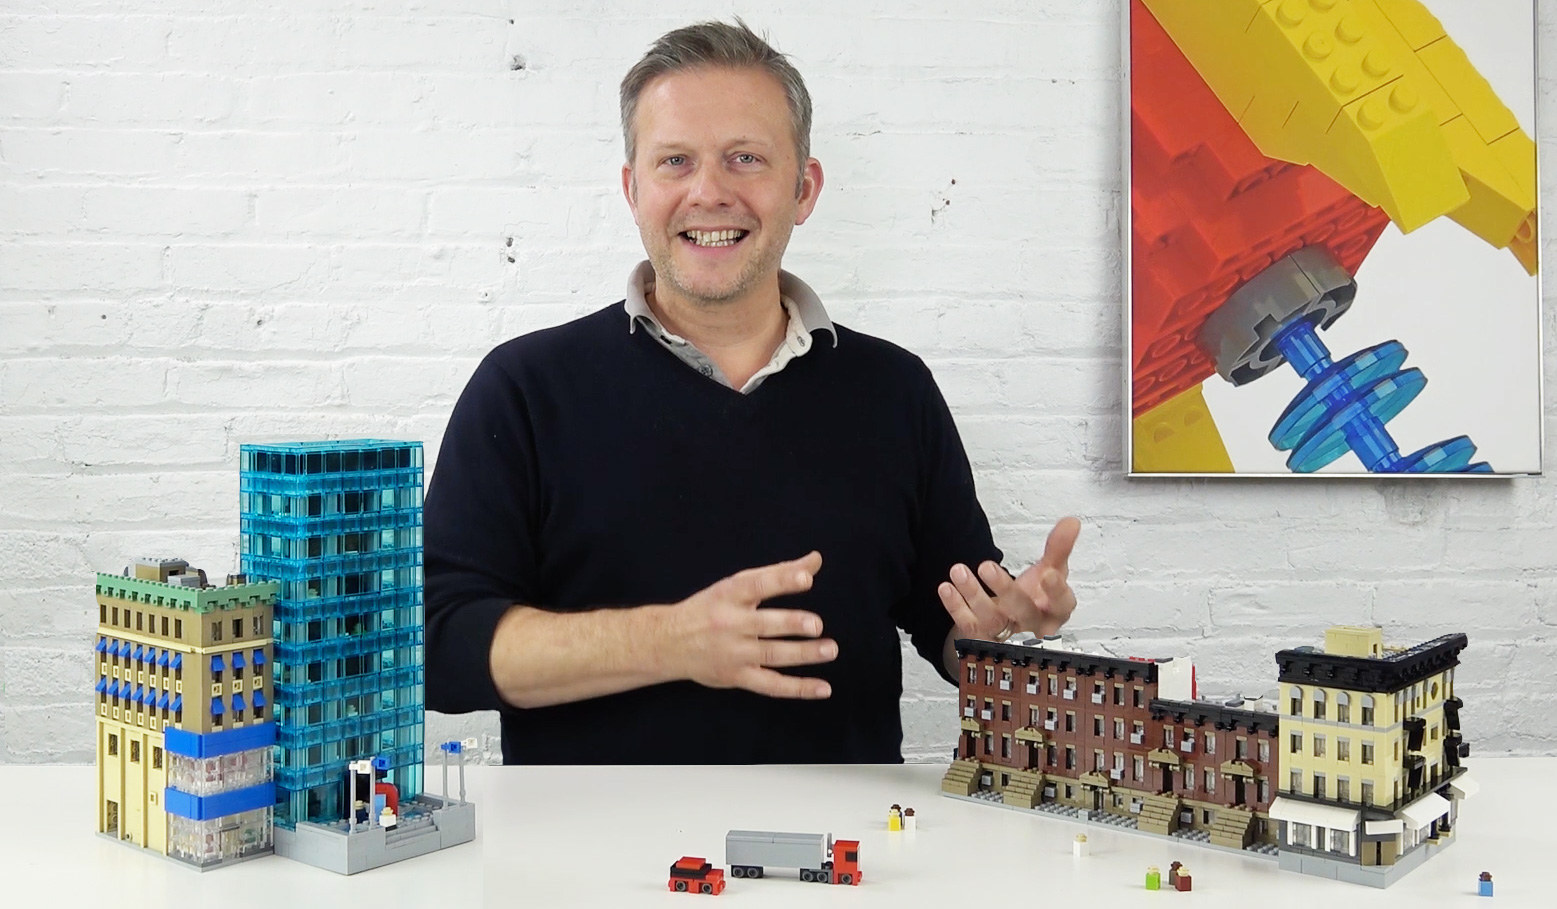 Sean-on-creating-scale-models-with-lego-bricks LEGO art by Sean Kenney